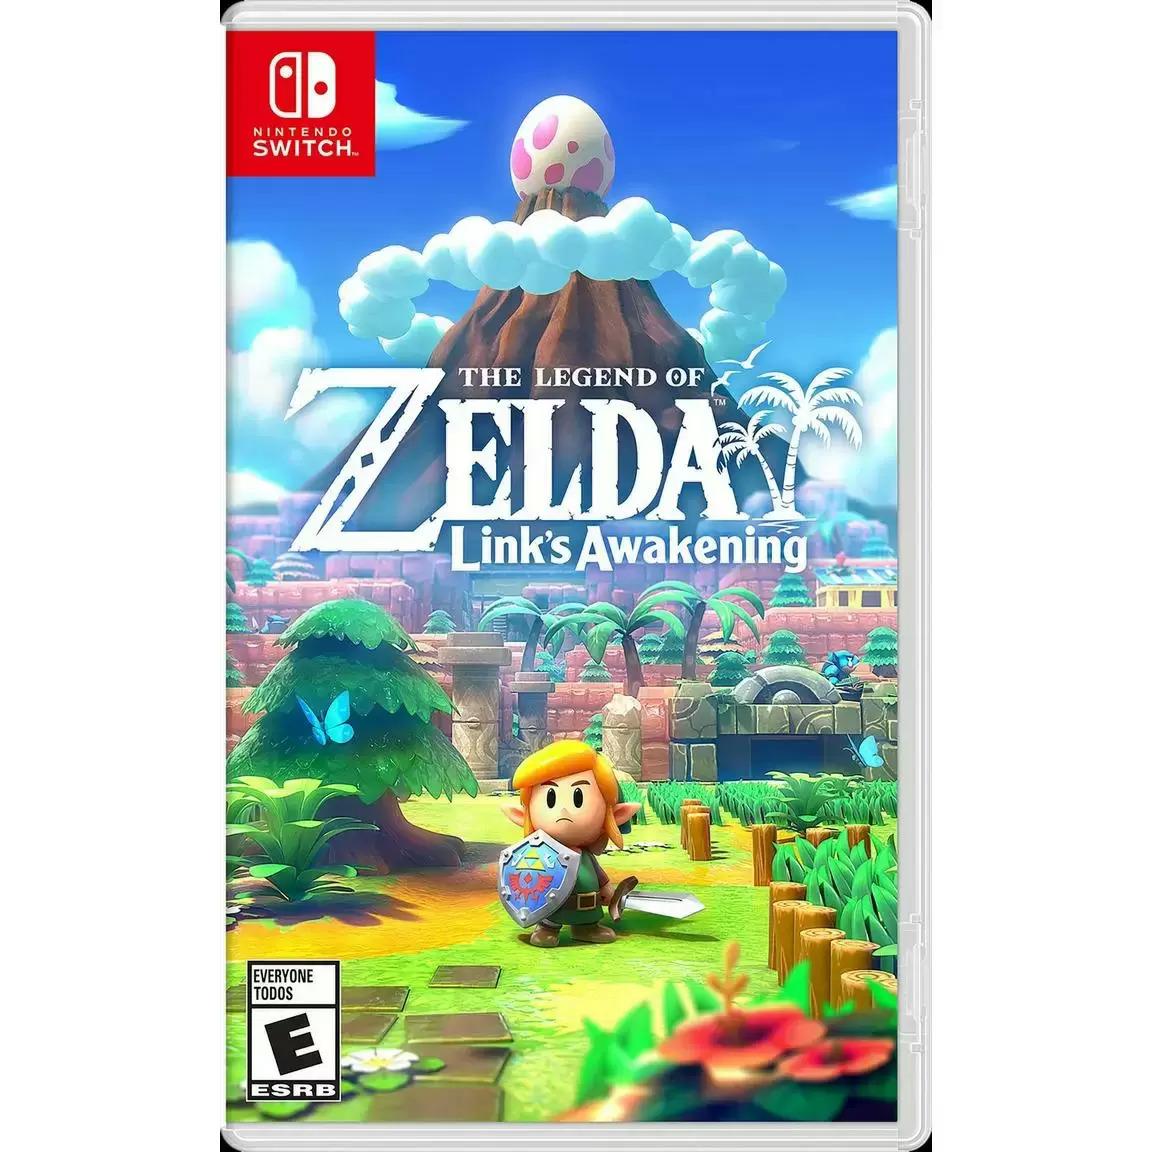 The Legend of Zelda Links Awakening Nintendo Switch for $39.99 Shipped